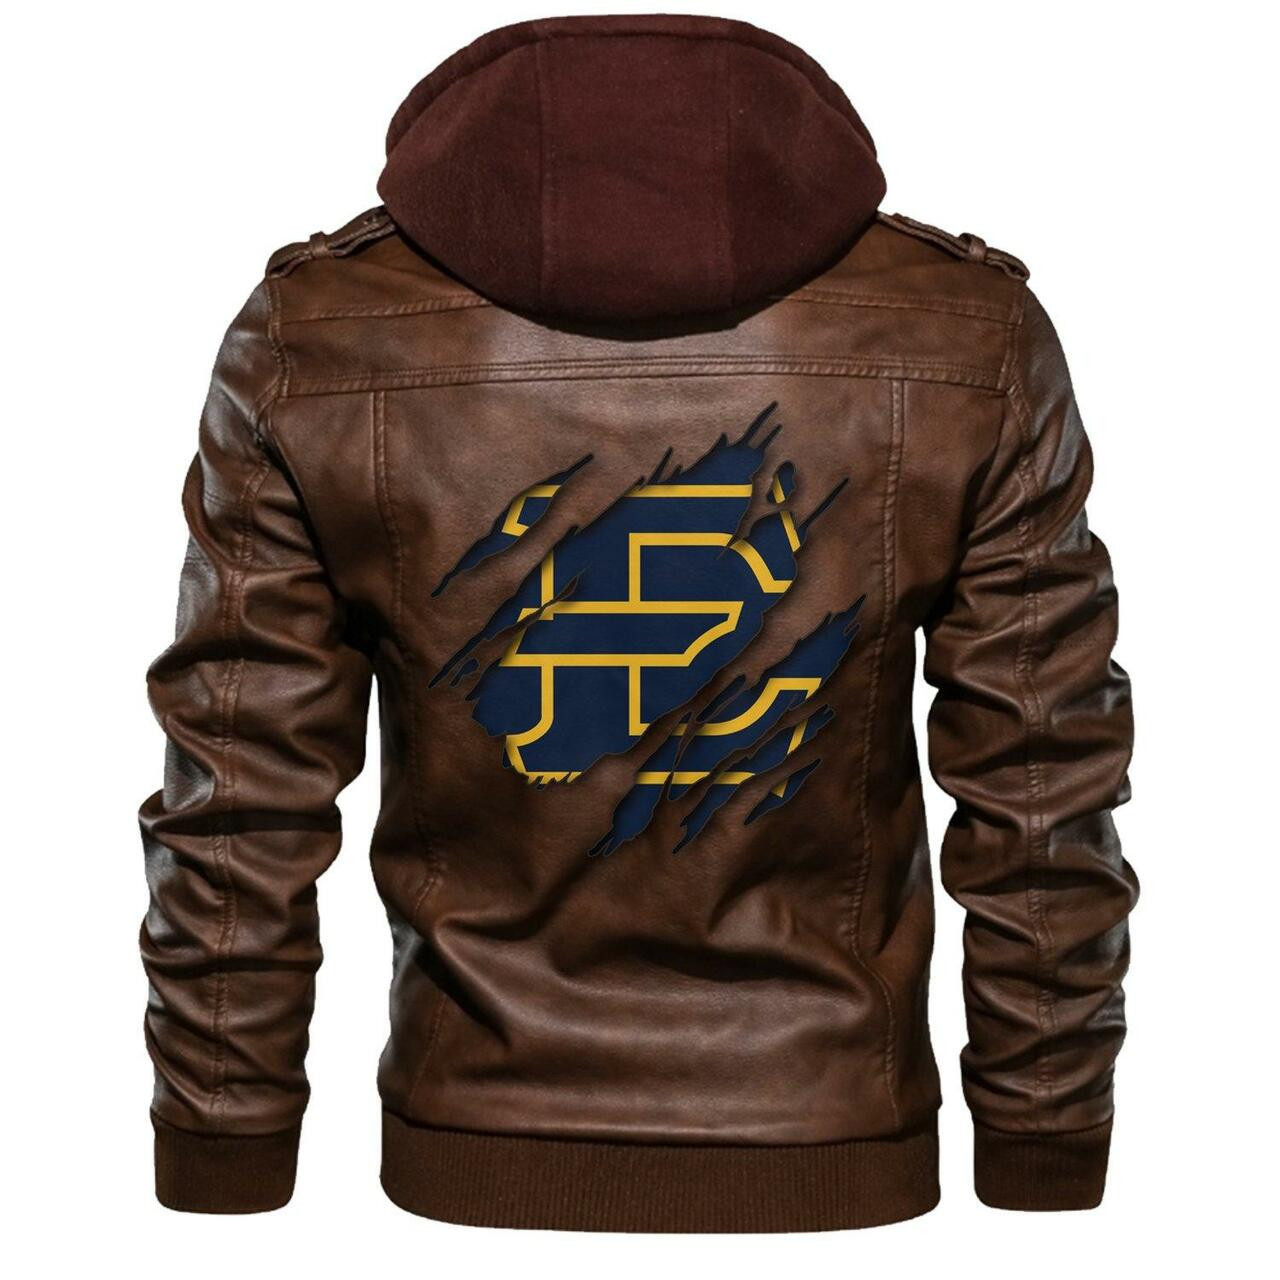 Top leather jacket Sells Best on Techcomshop 120